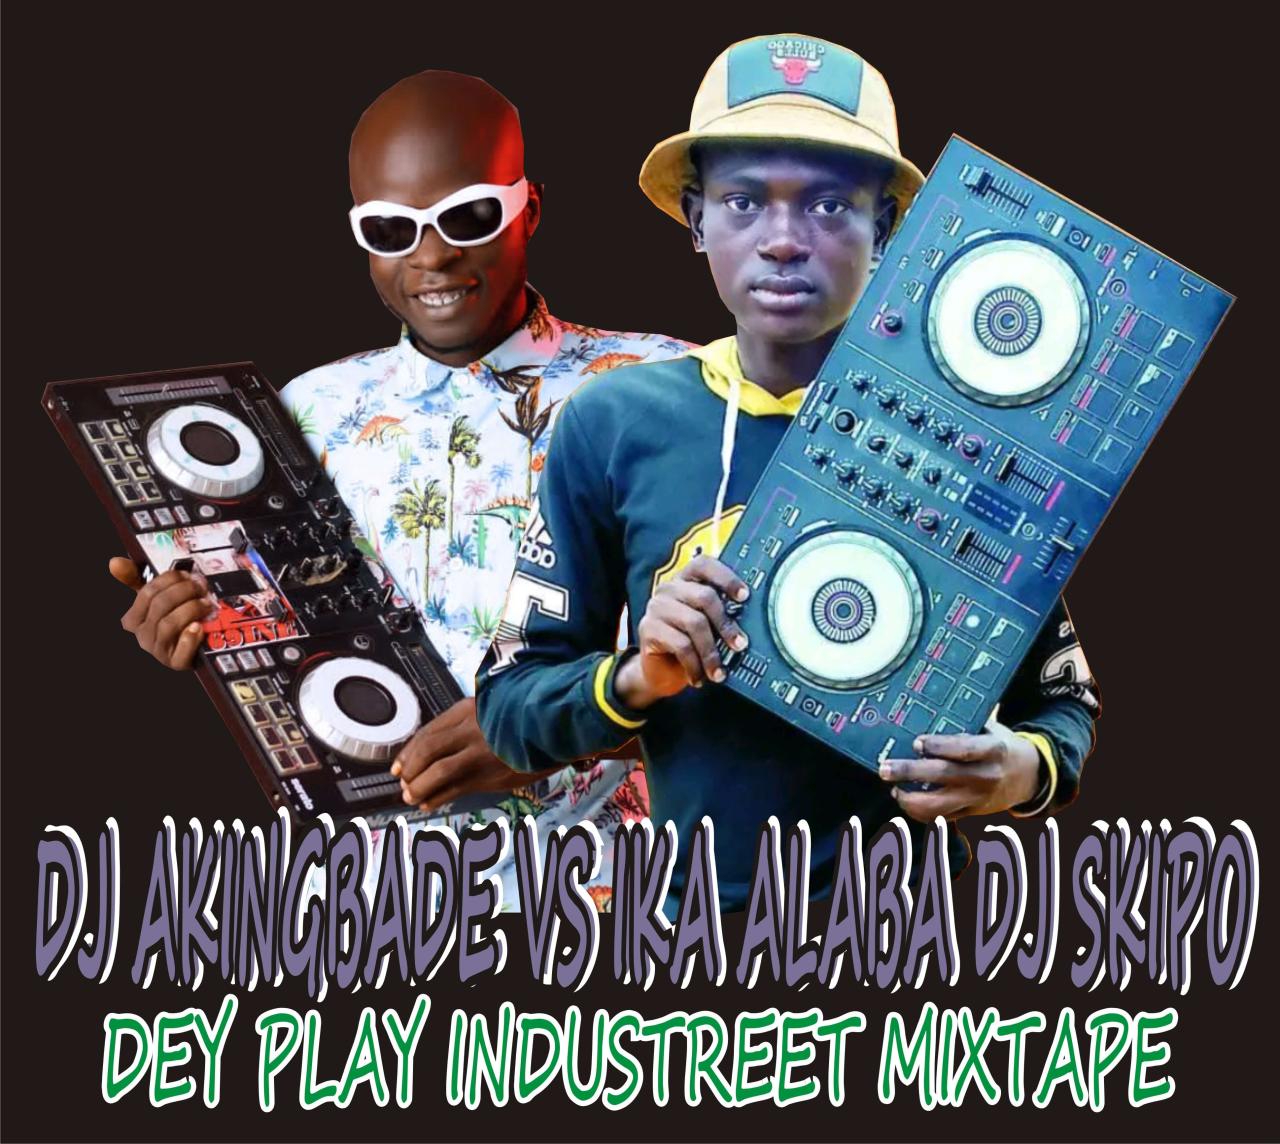 Hot Mix DJ Akingbade Vs Ika Alaba DJ Skipo Dey Play Industreet Mixtape